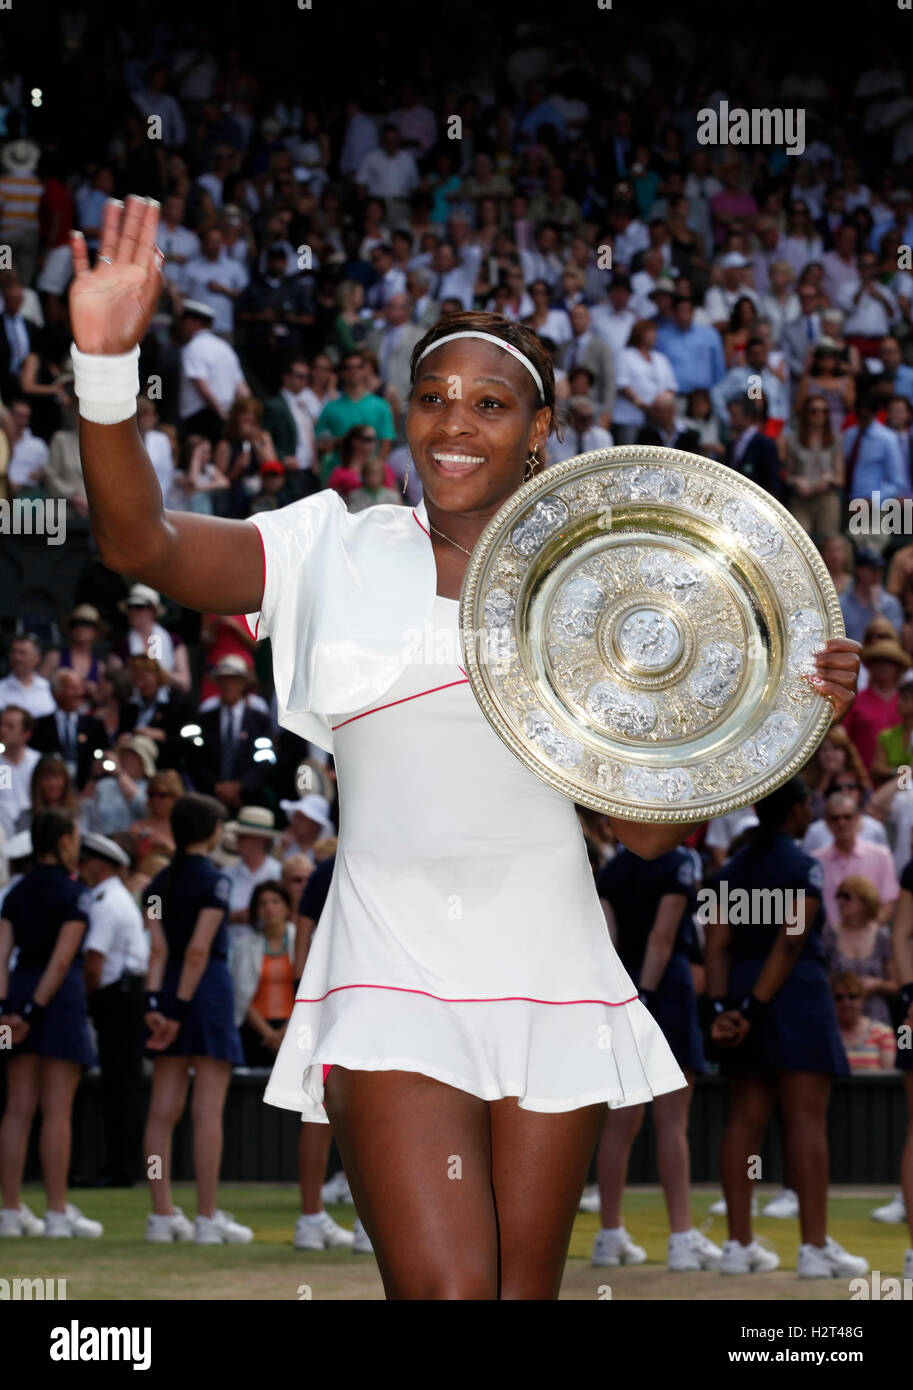 Frauen Finale, Serena Williams, USA, 2010 Wimbledon, ITF Grand-Slam-Turnier, Wimbledon, England, Vereinigtes Königreich, Europa Stockfoto